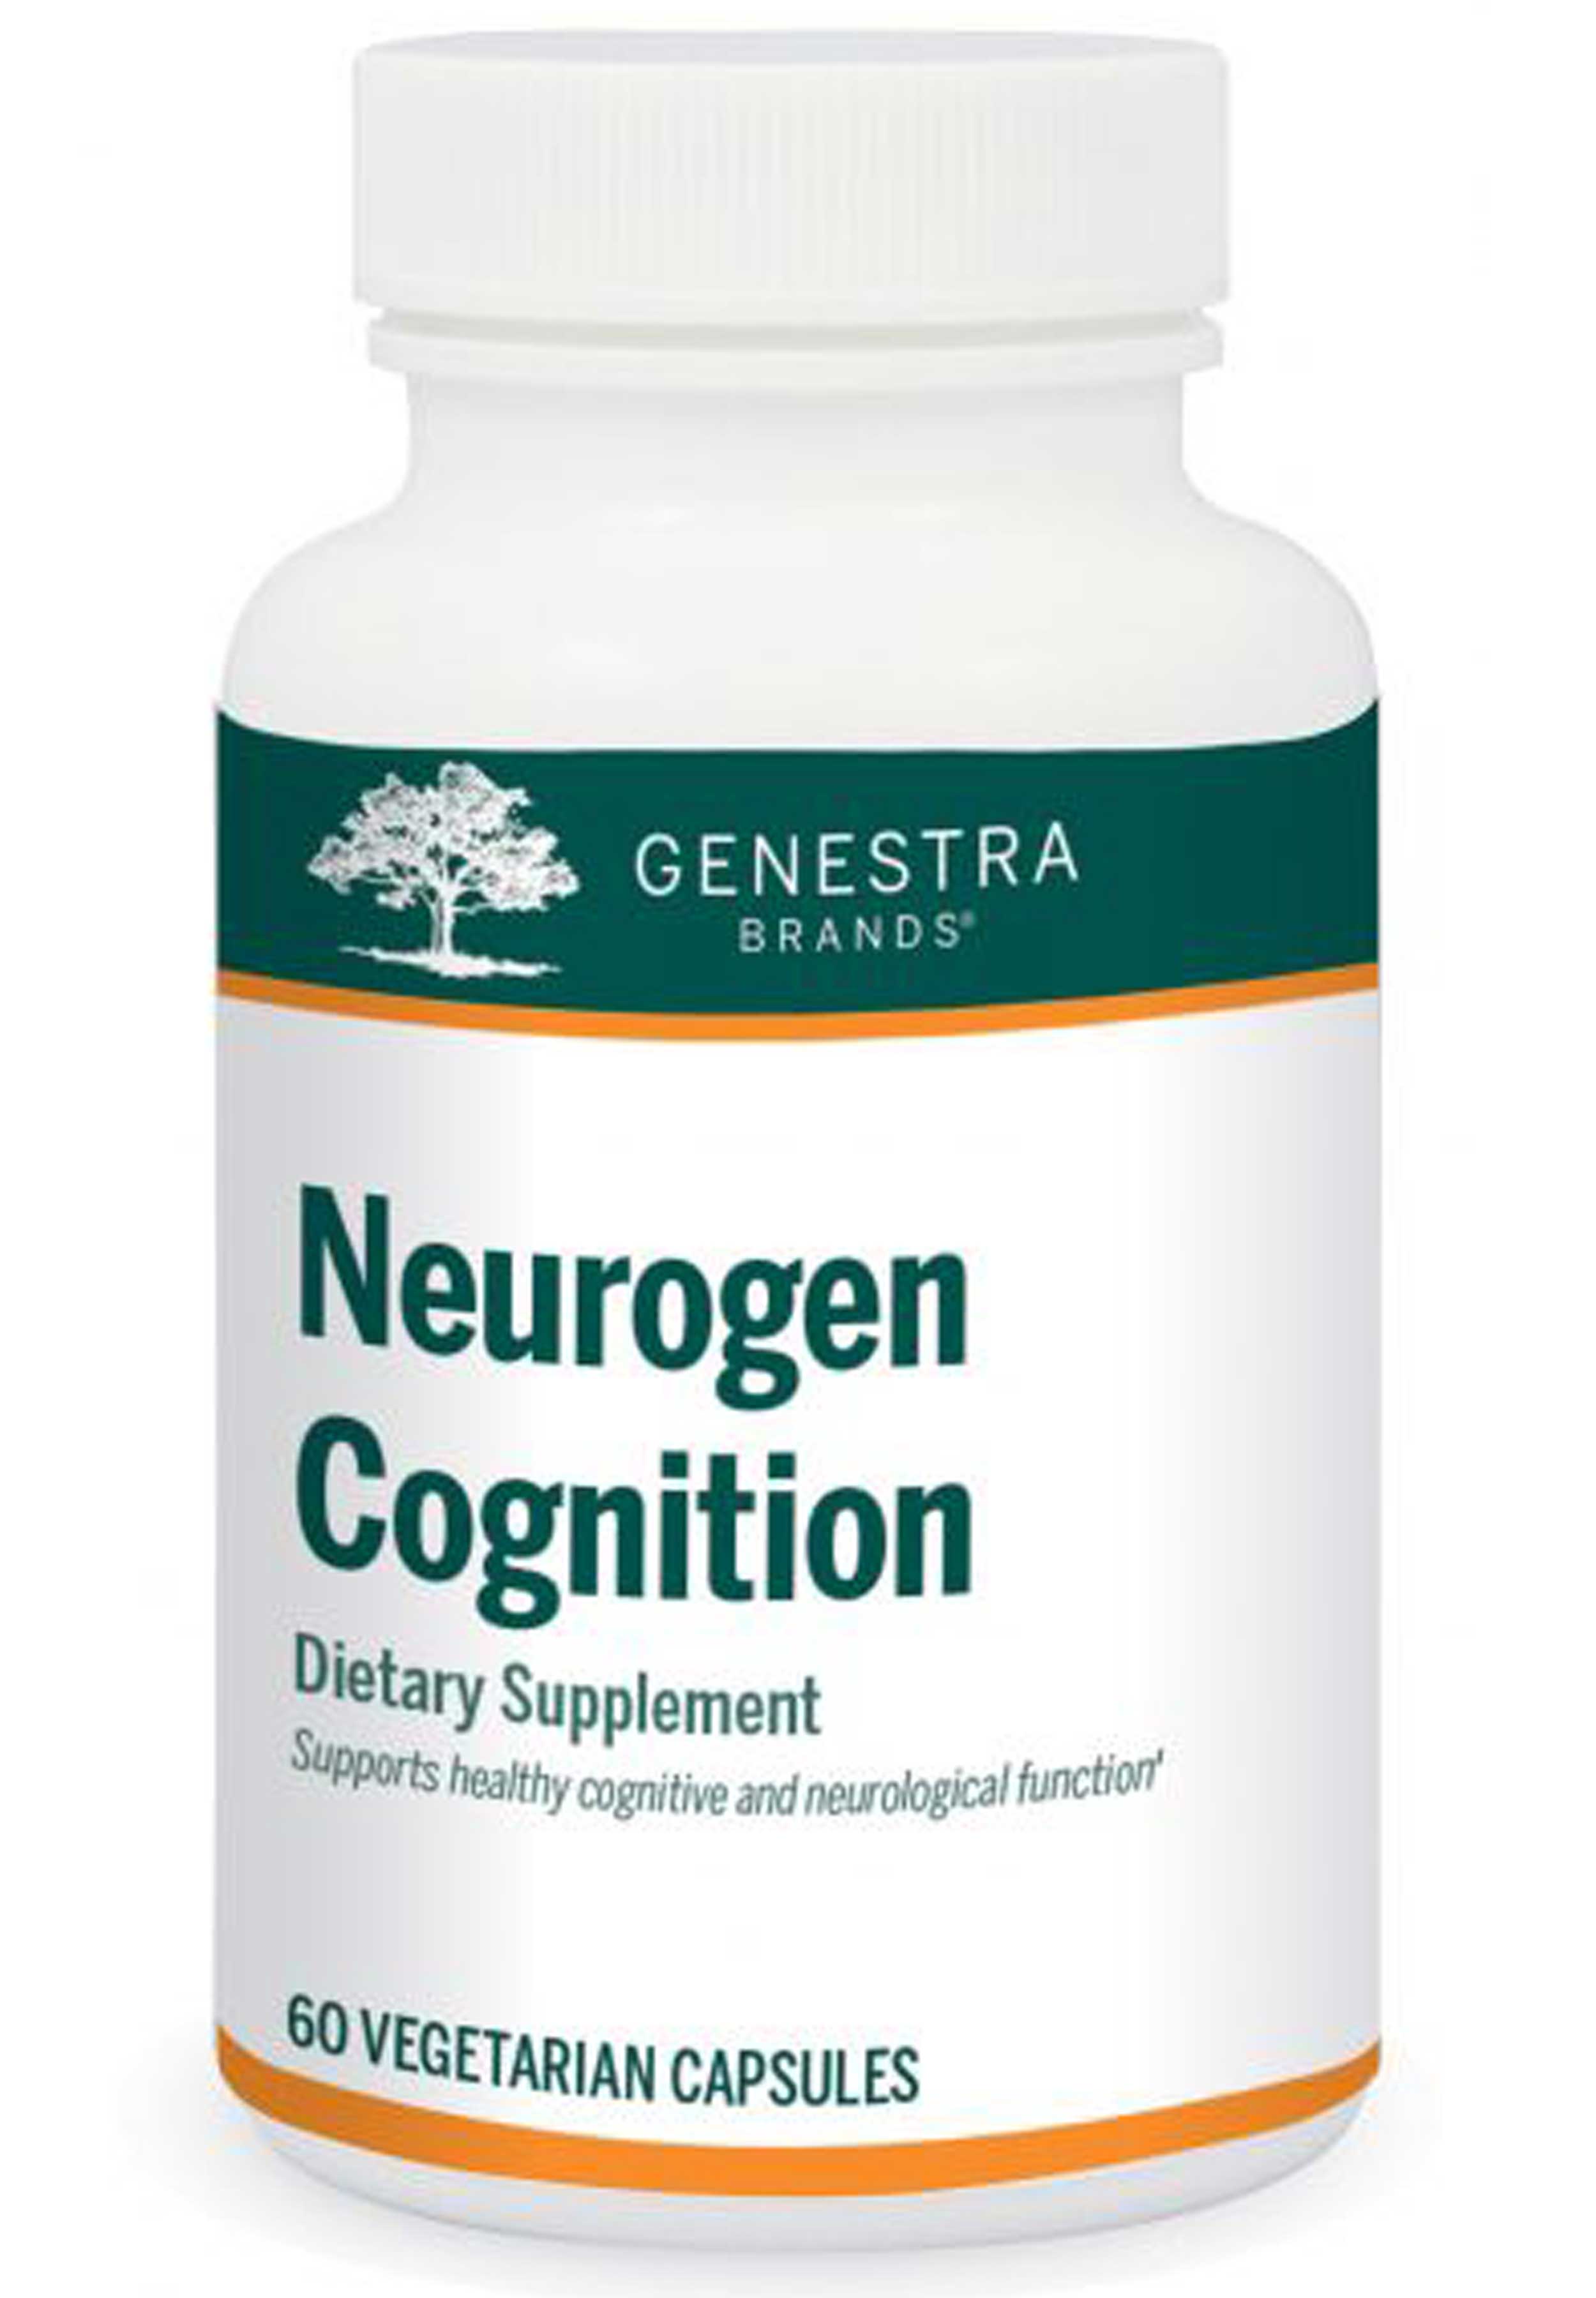 Genestra Brands Neurogen Cognition